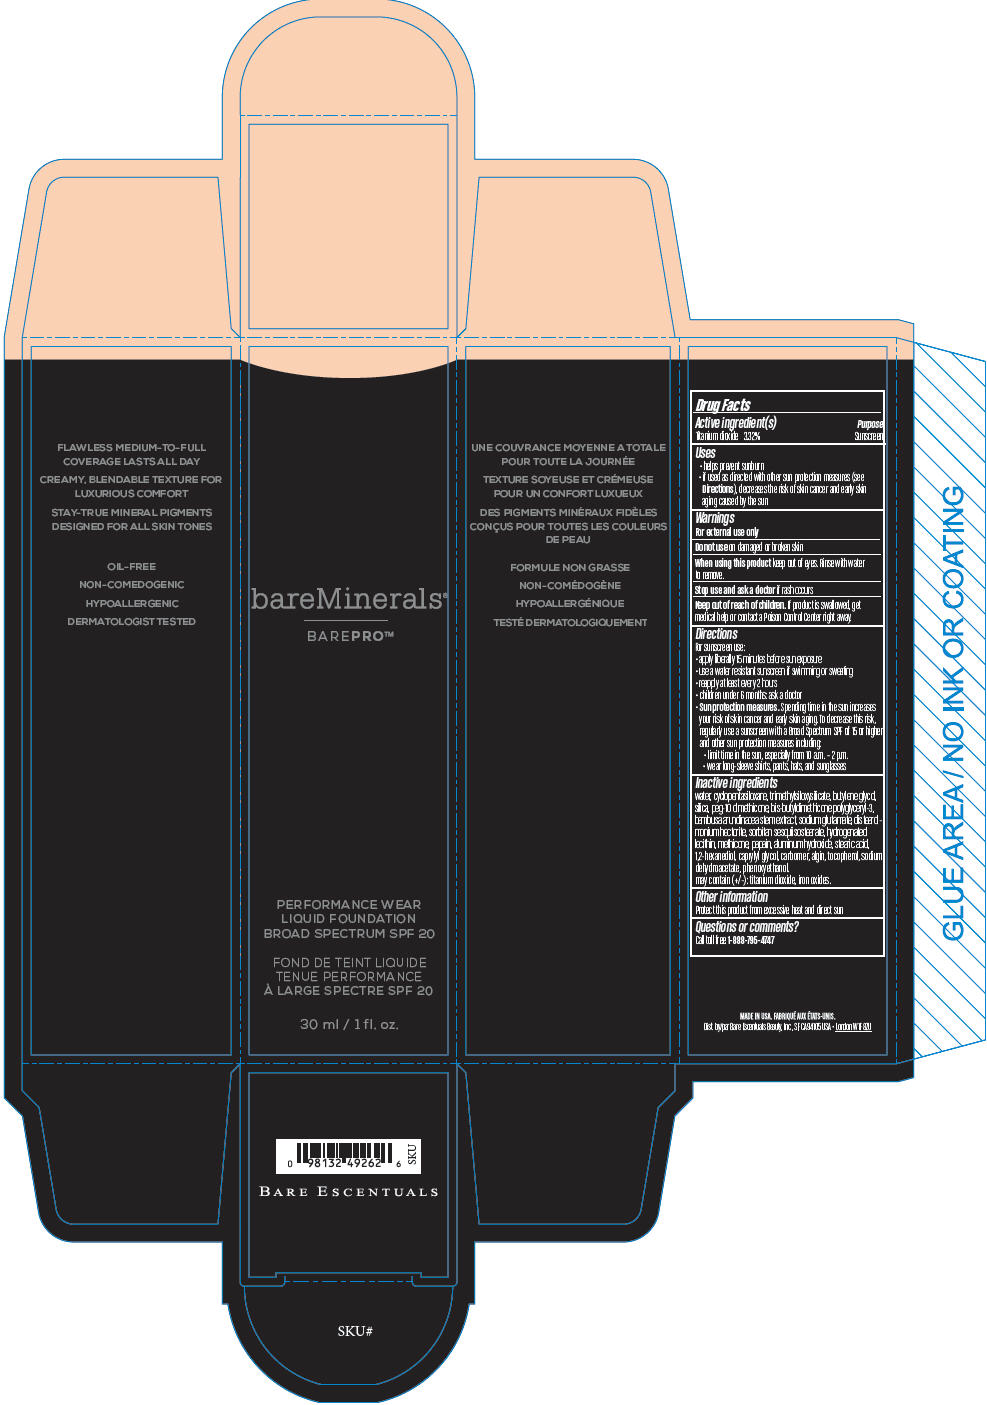 PRINCIPAL DISPLAY PANEL - 30 ml Bottle Carton - Pecan 18